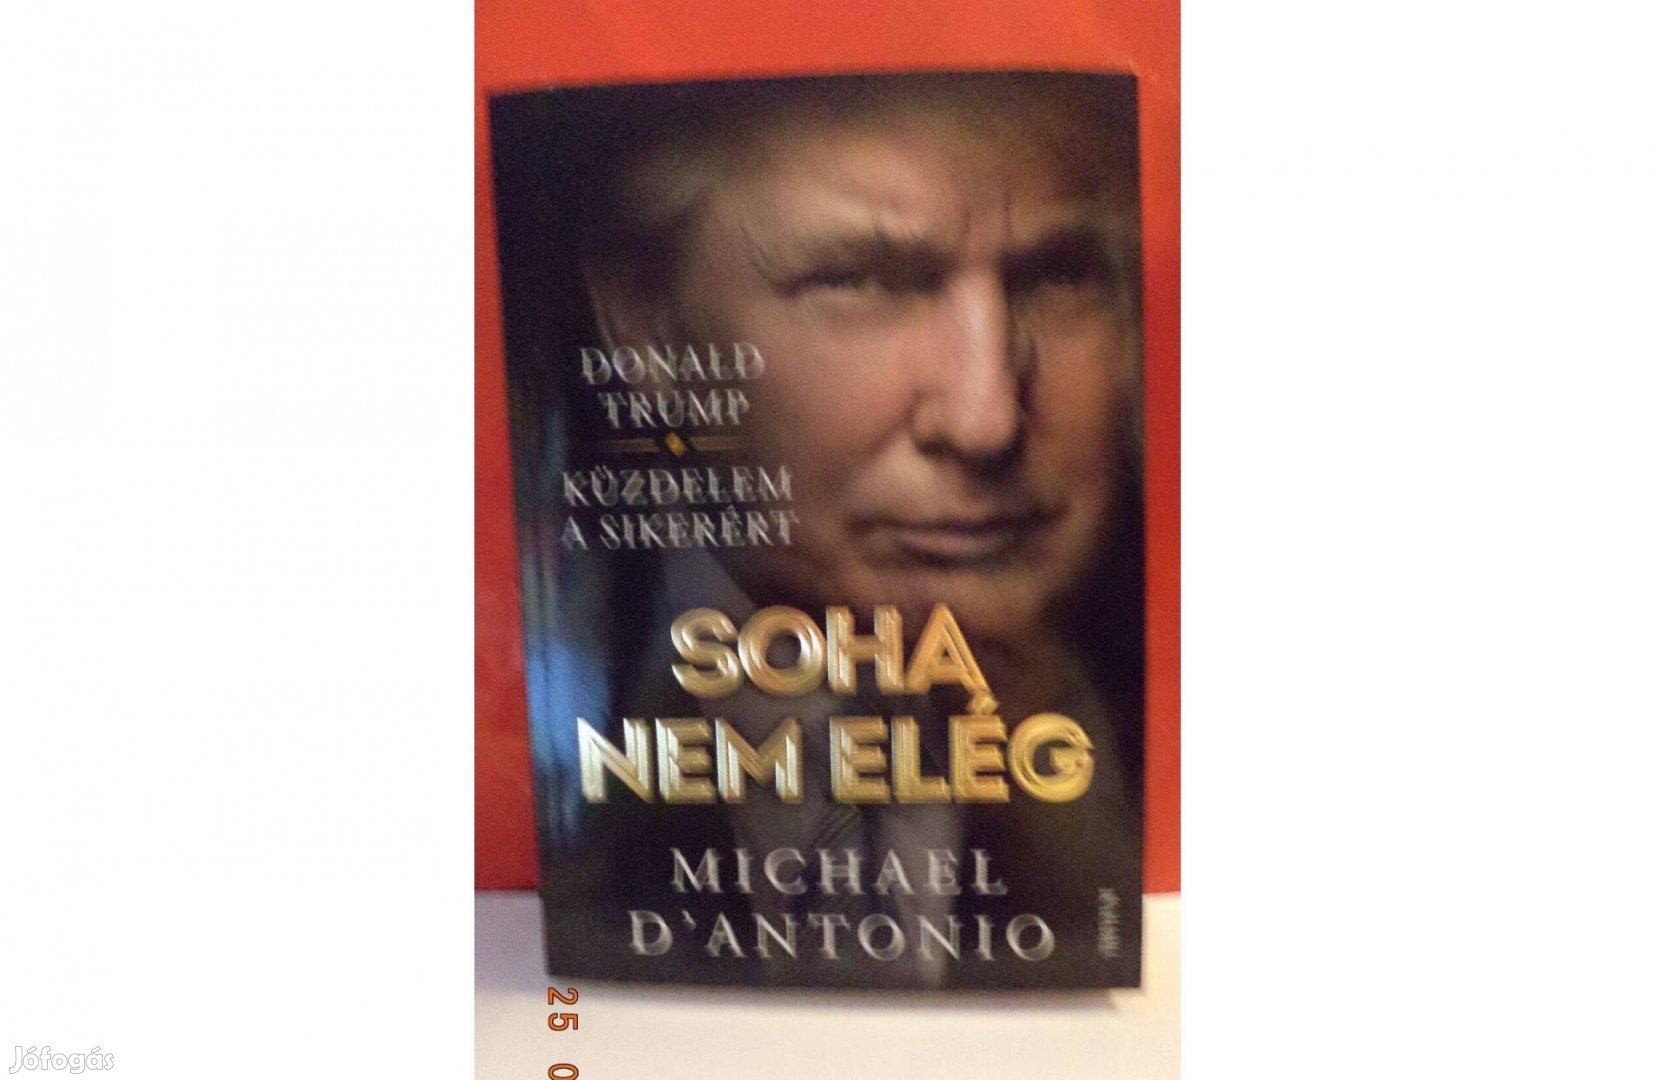 Michael D'Antonio: Donald Trump - Küzdelem a sikerért